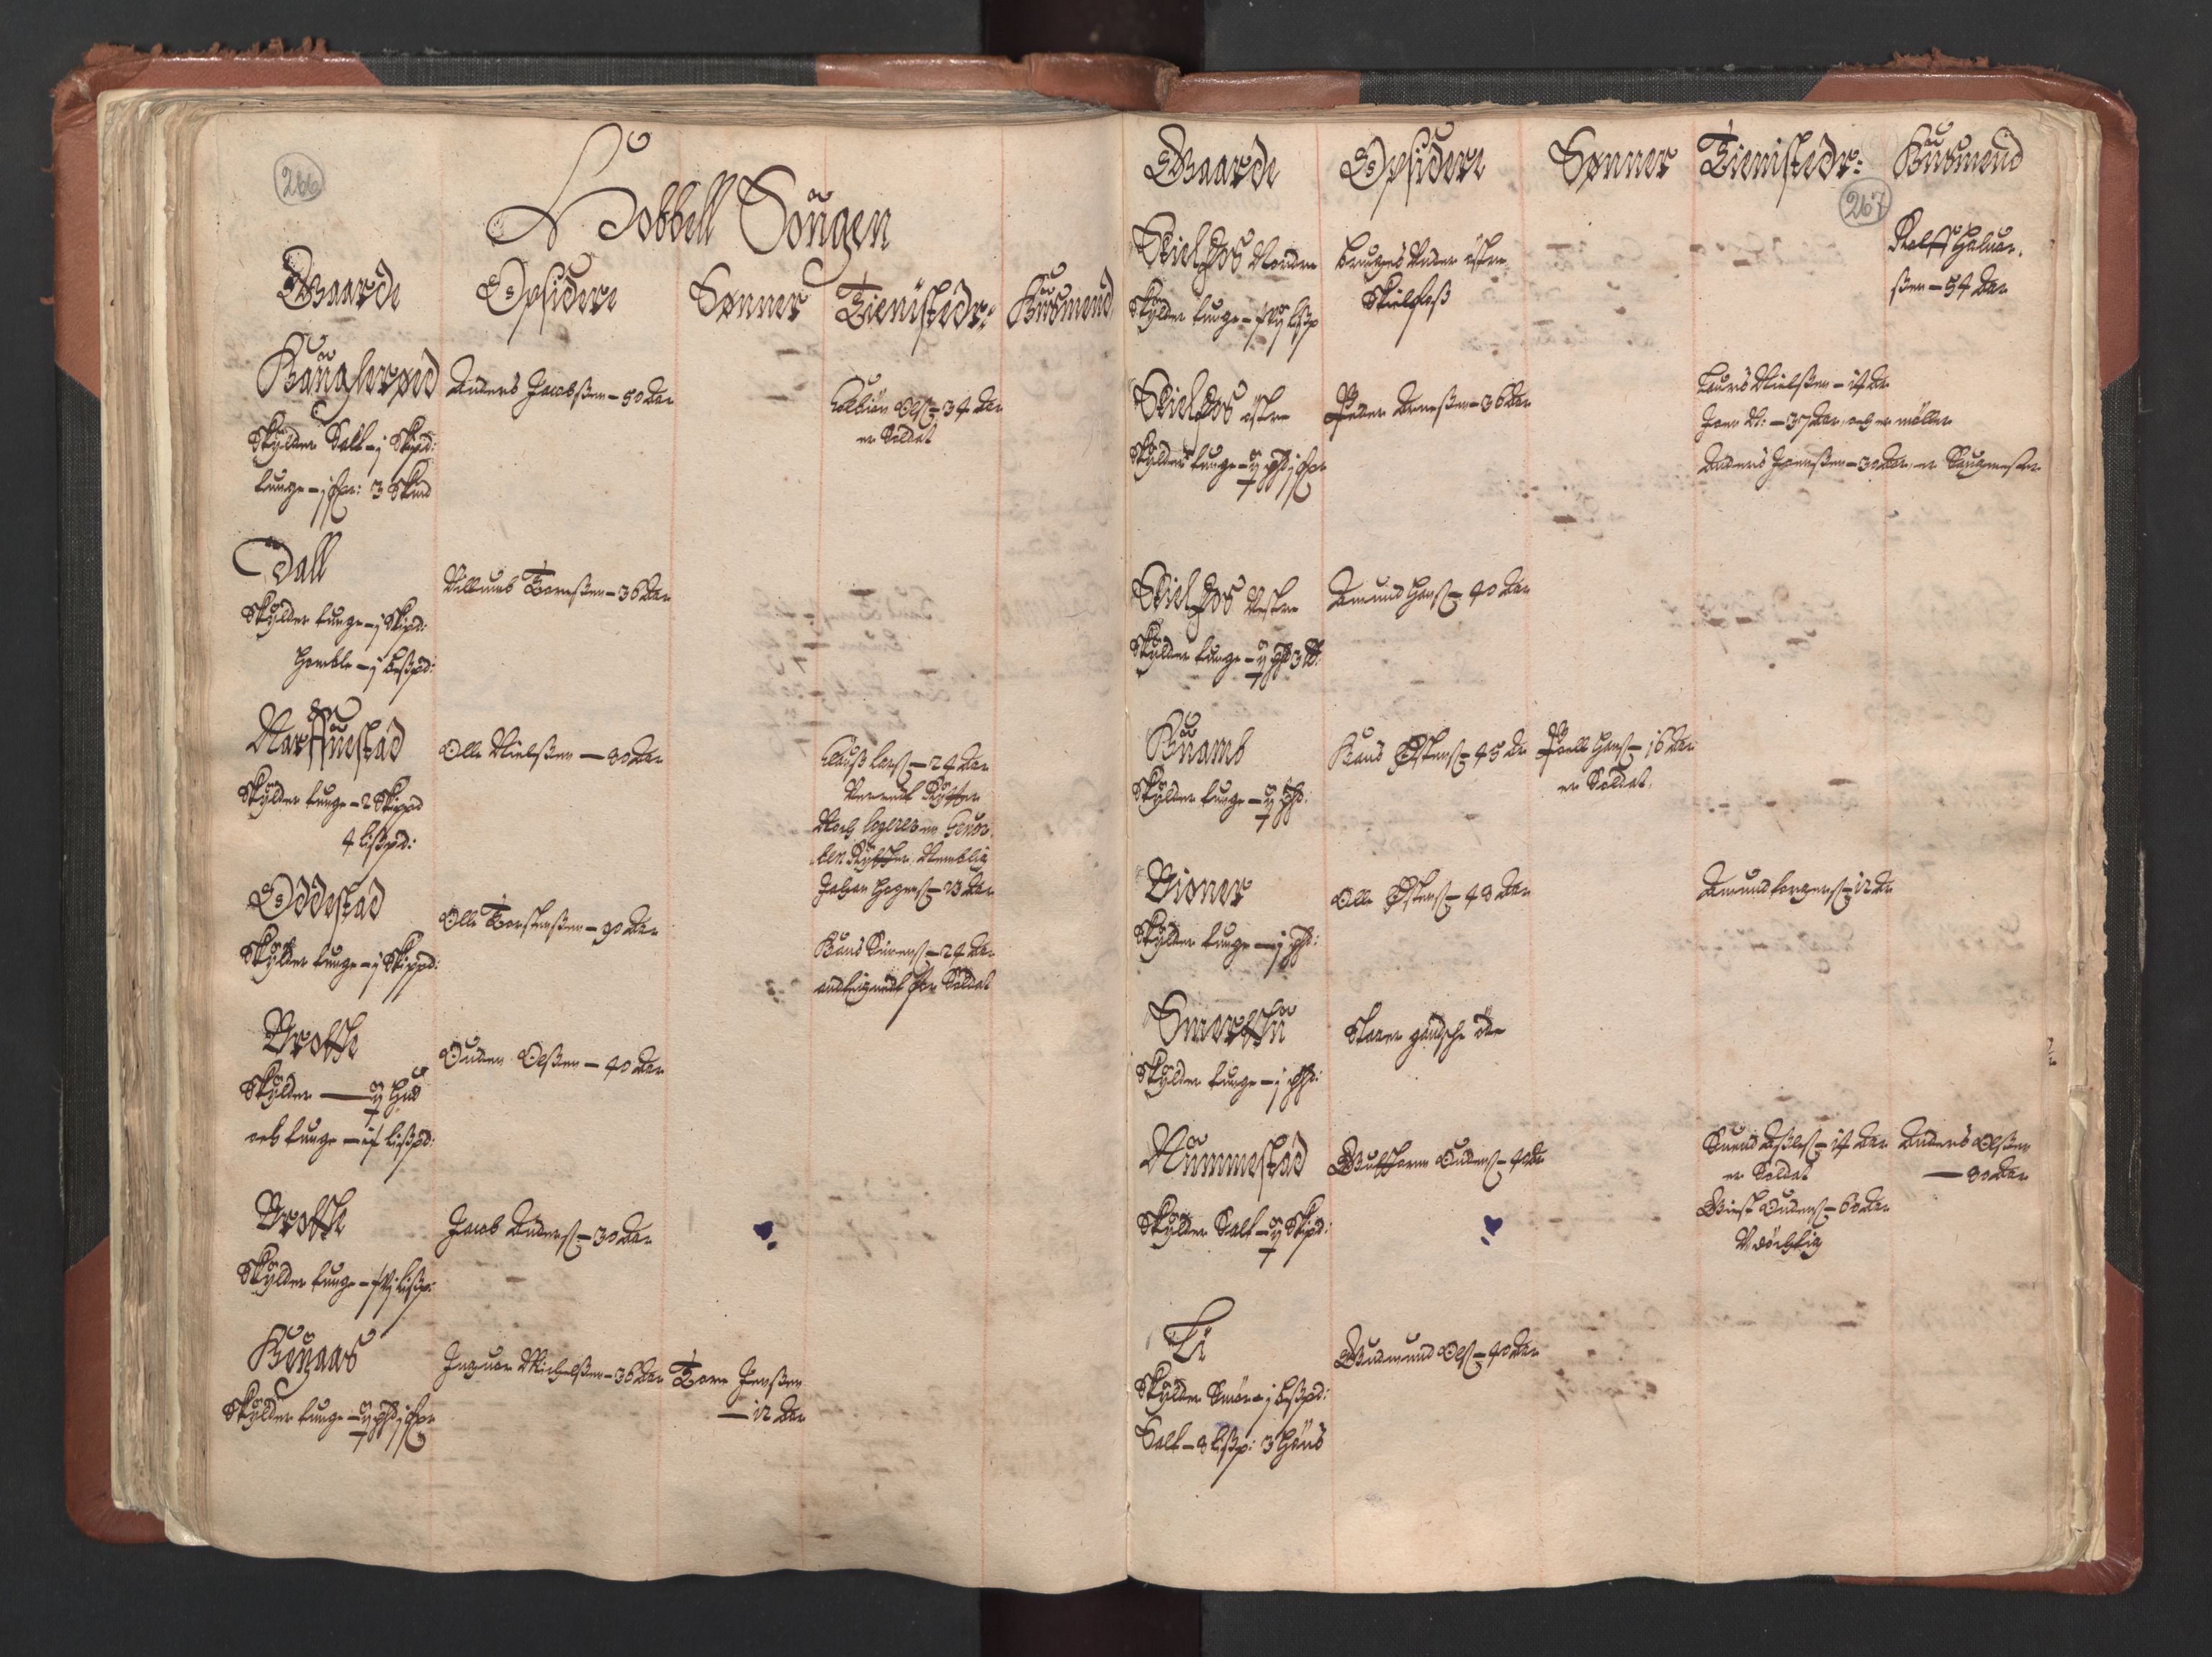 RA, Fogdenes og sorenskrivernes manntall 1664-1666, nr. 1: Fogderier (len og skipreider) i nåværende Østfold fylke, 1664, s. 266-267